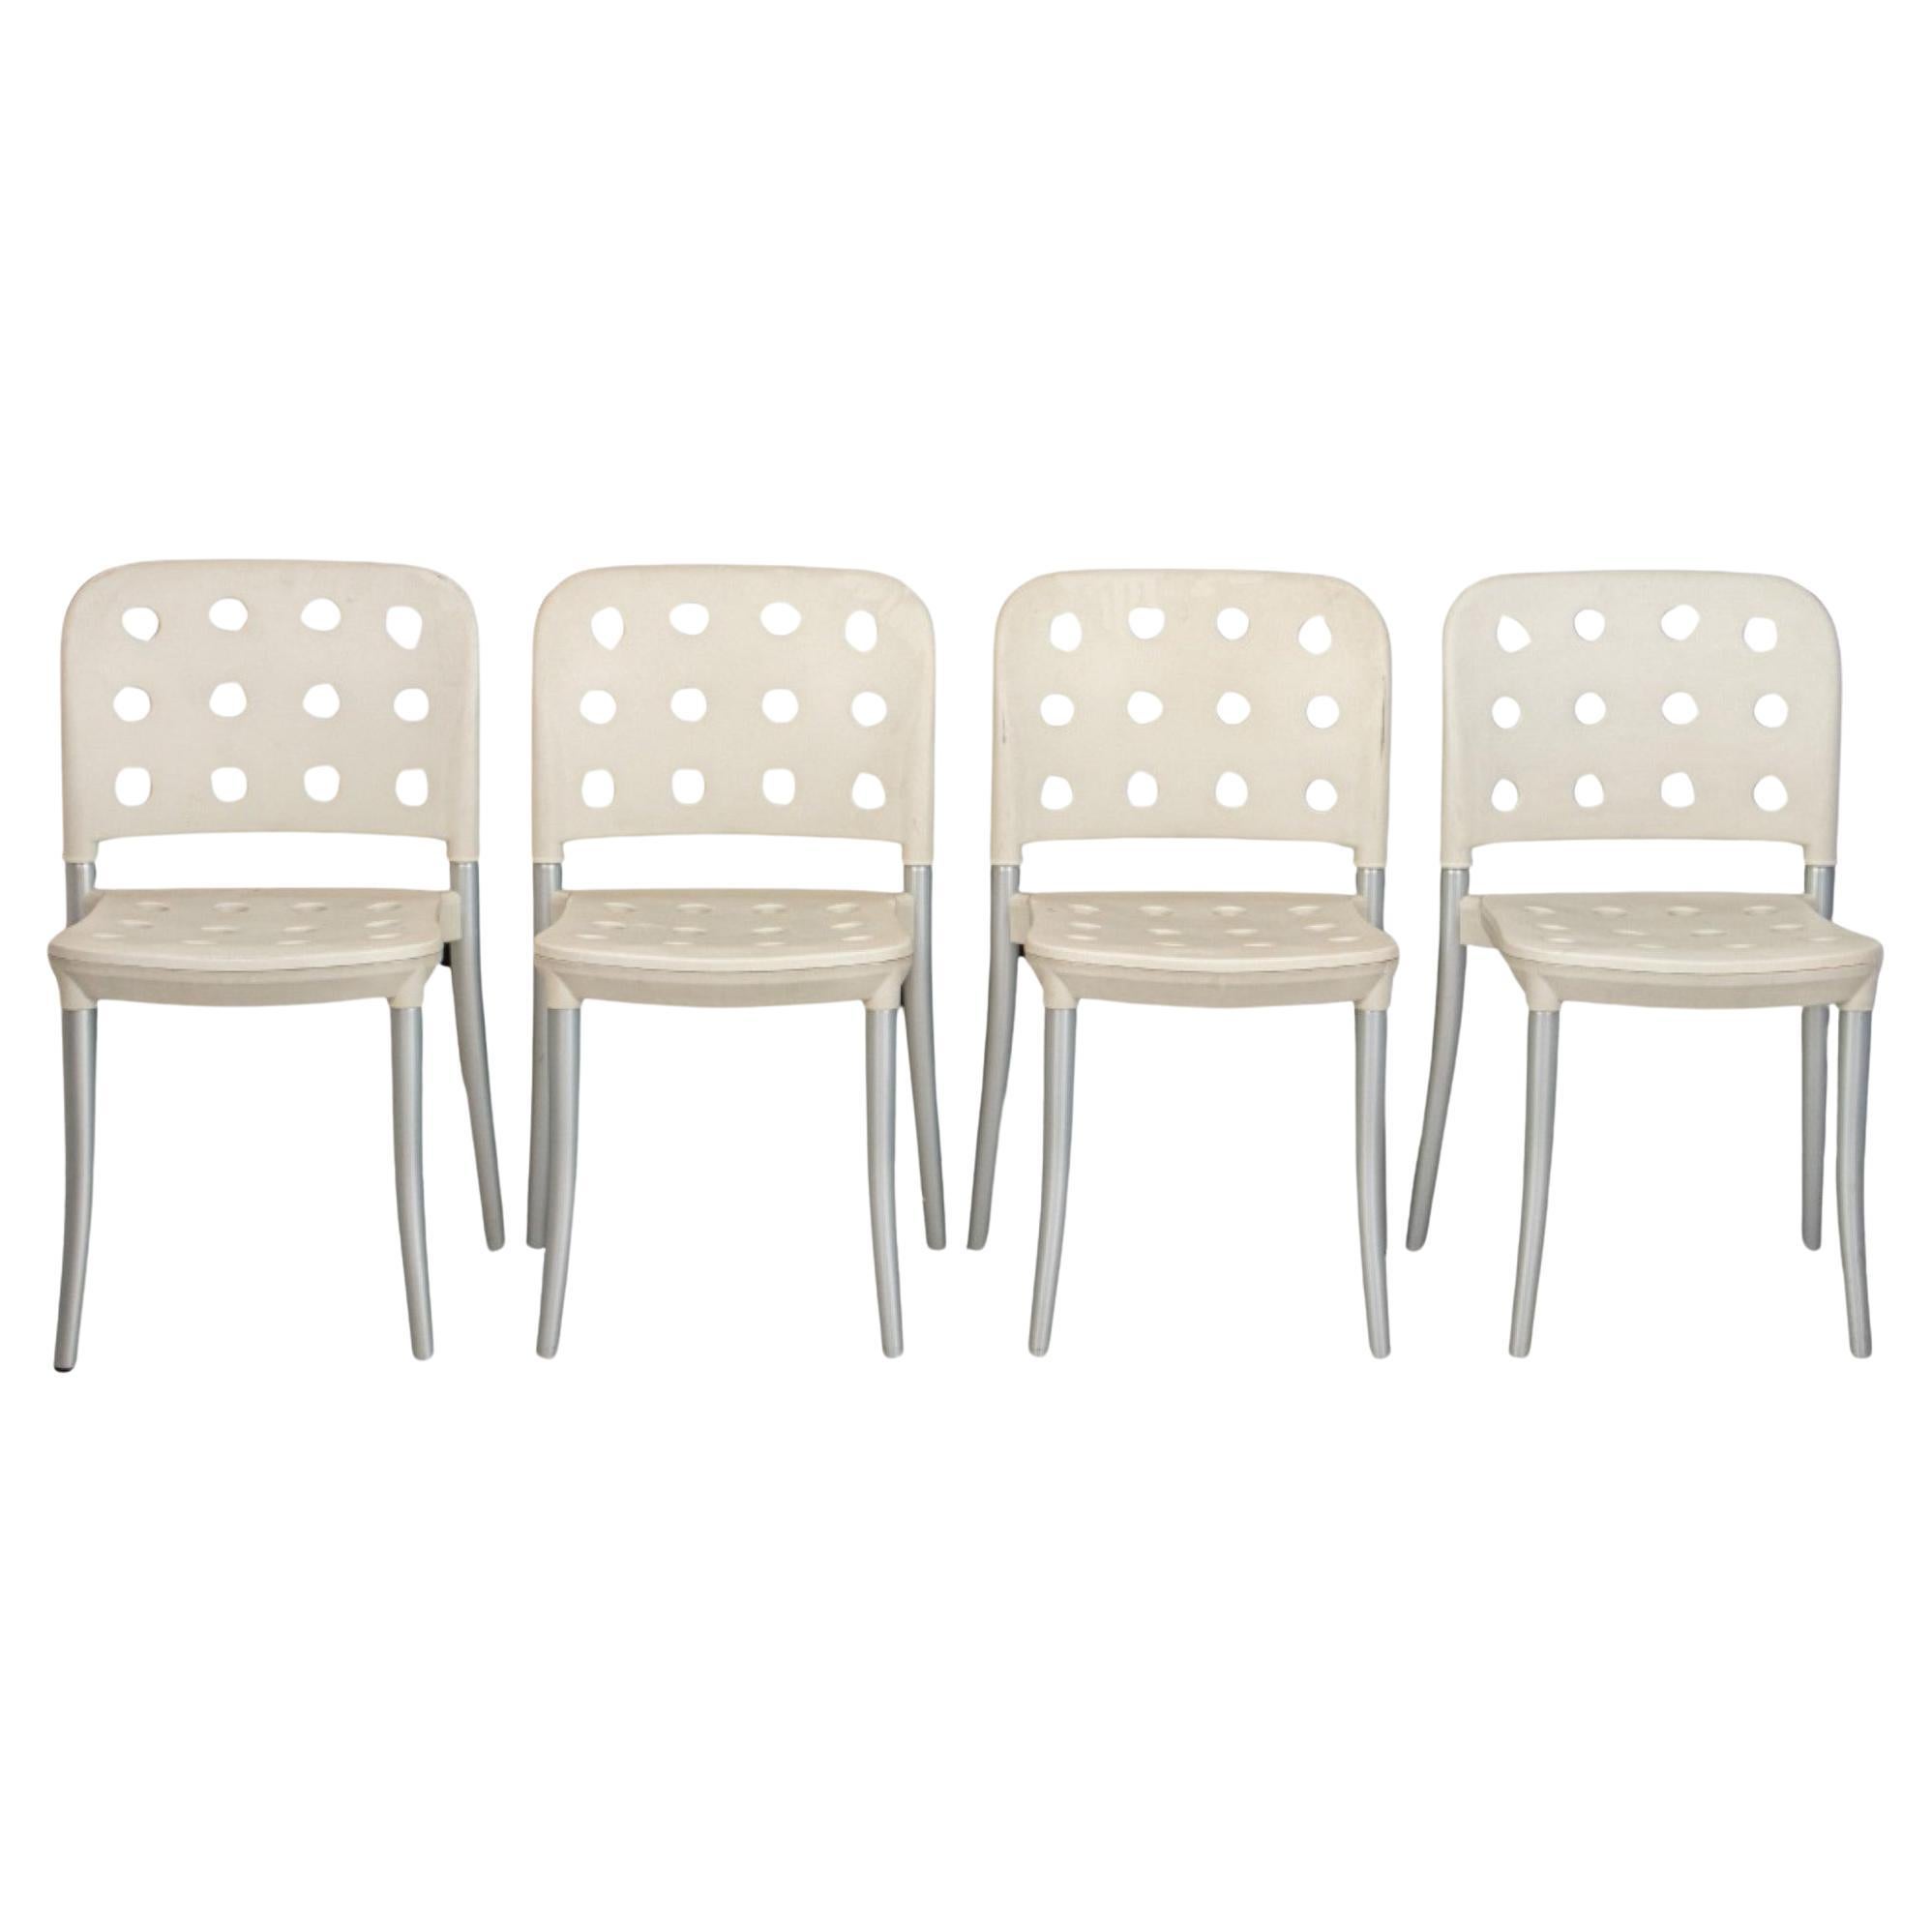 Antonio Ciitterio for Halifax "Minni" Chairs, 4 For Sale